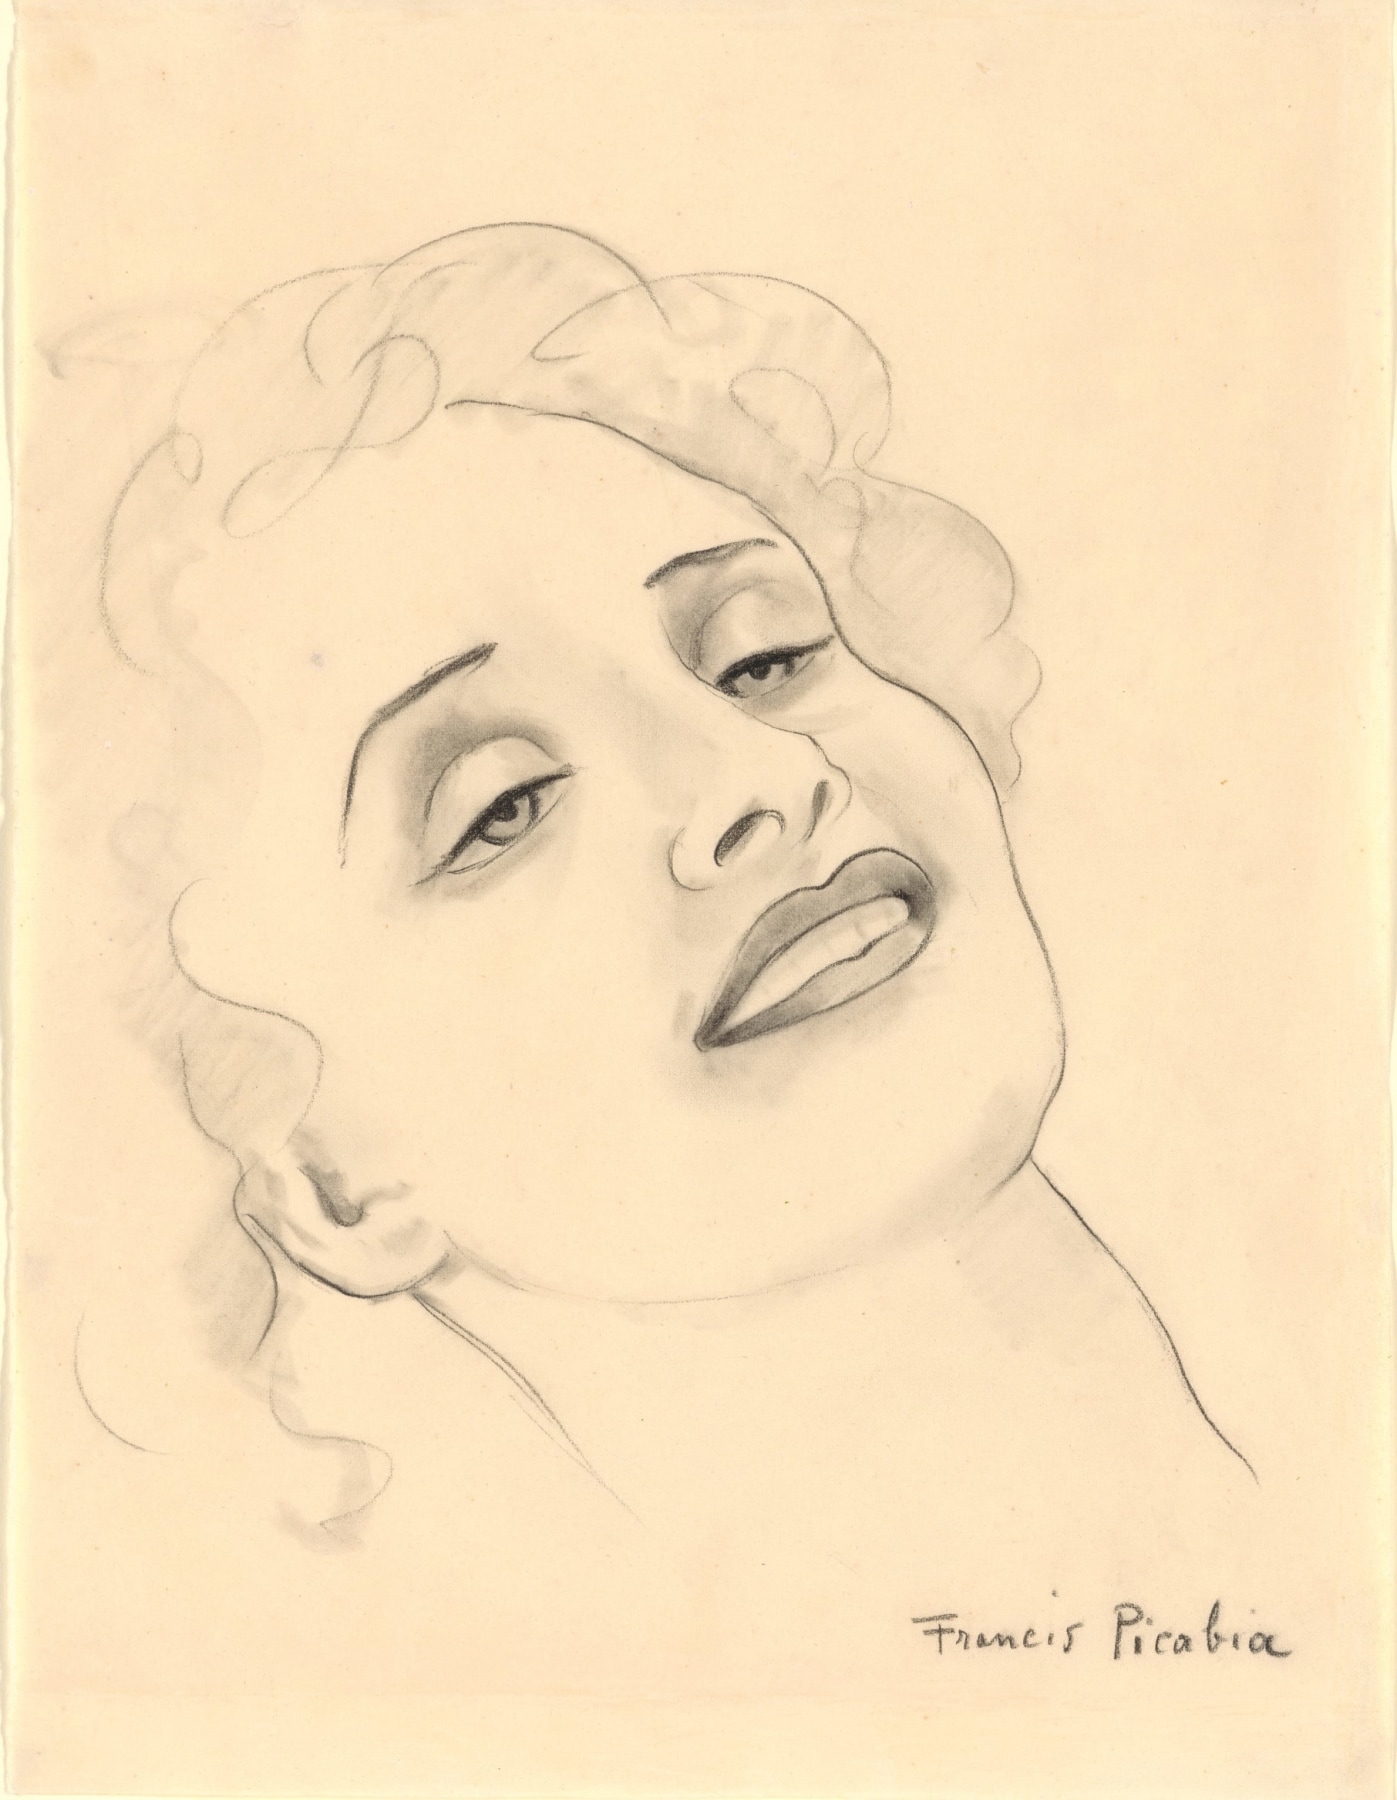 Francis Picabia

&amp;ldquo;T&amp;ecirc;te de femme&amp;rdquo;, ca. 1942

Pencil on paper

10 3/4 x 8 1/4 inches

27.5 x 21 cm

PIZ 151